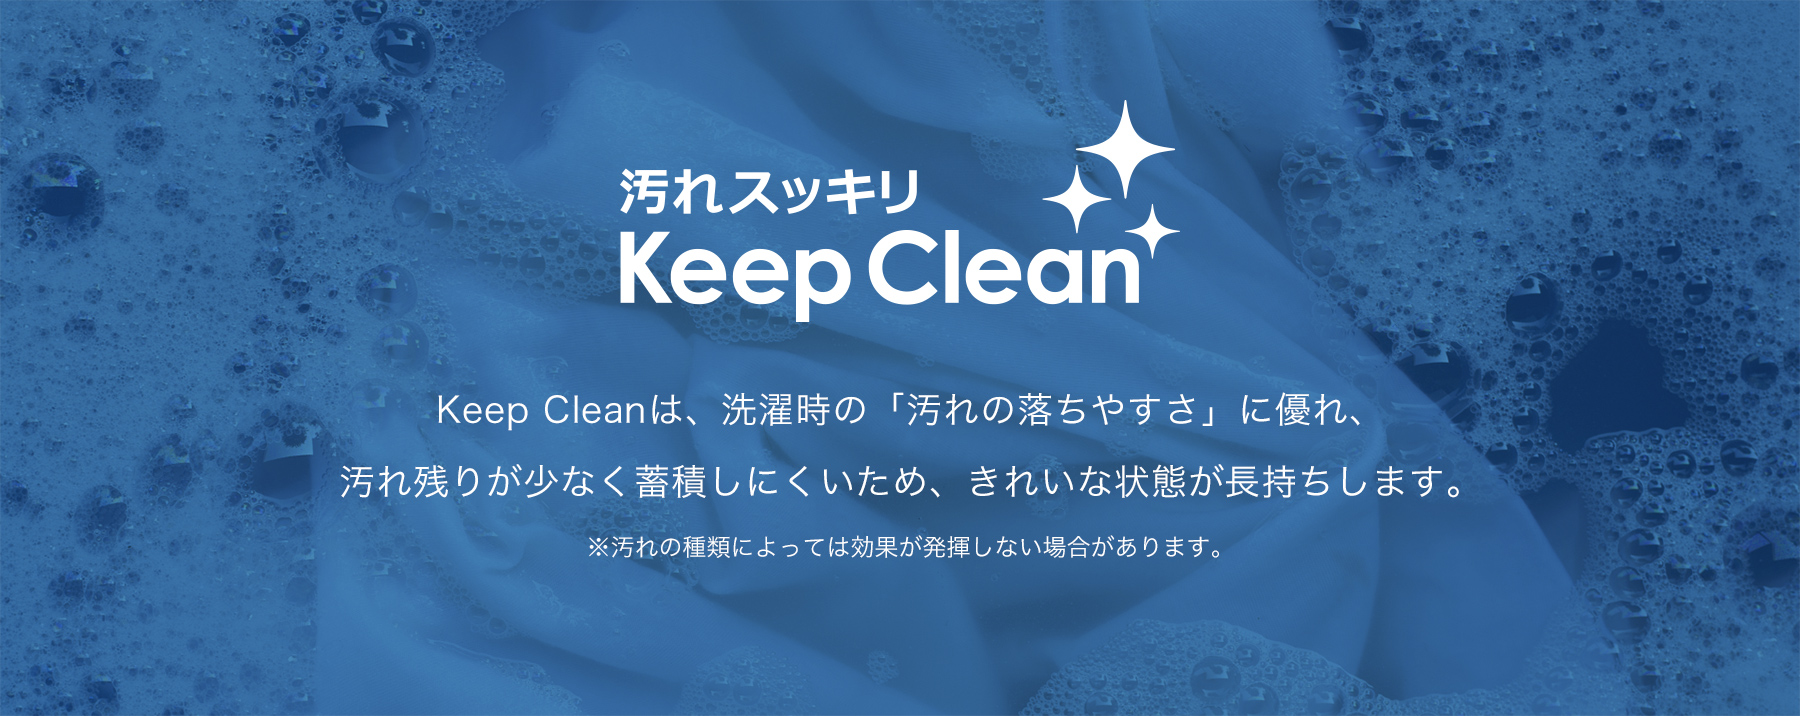 Keep Cleanは、洗濯時の「汚れの落ちやすさ」に優れ、
汚れ残りが少なく蓄積しにくいため、きれいな状態が長持ちします。※汚れの種類によっては効果が発揮しない場合があります。